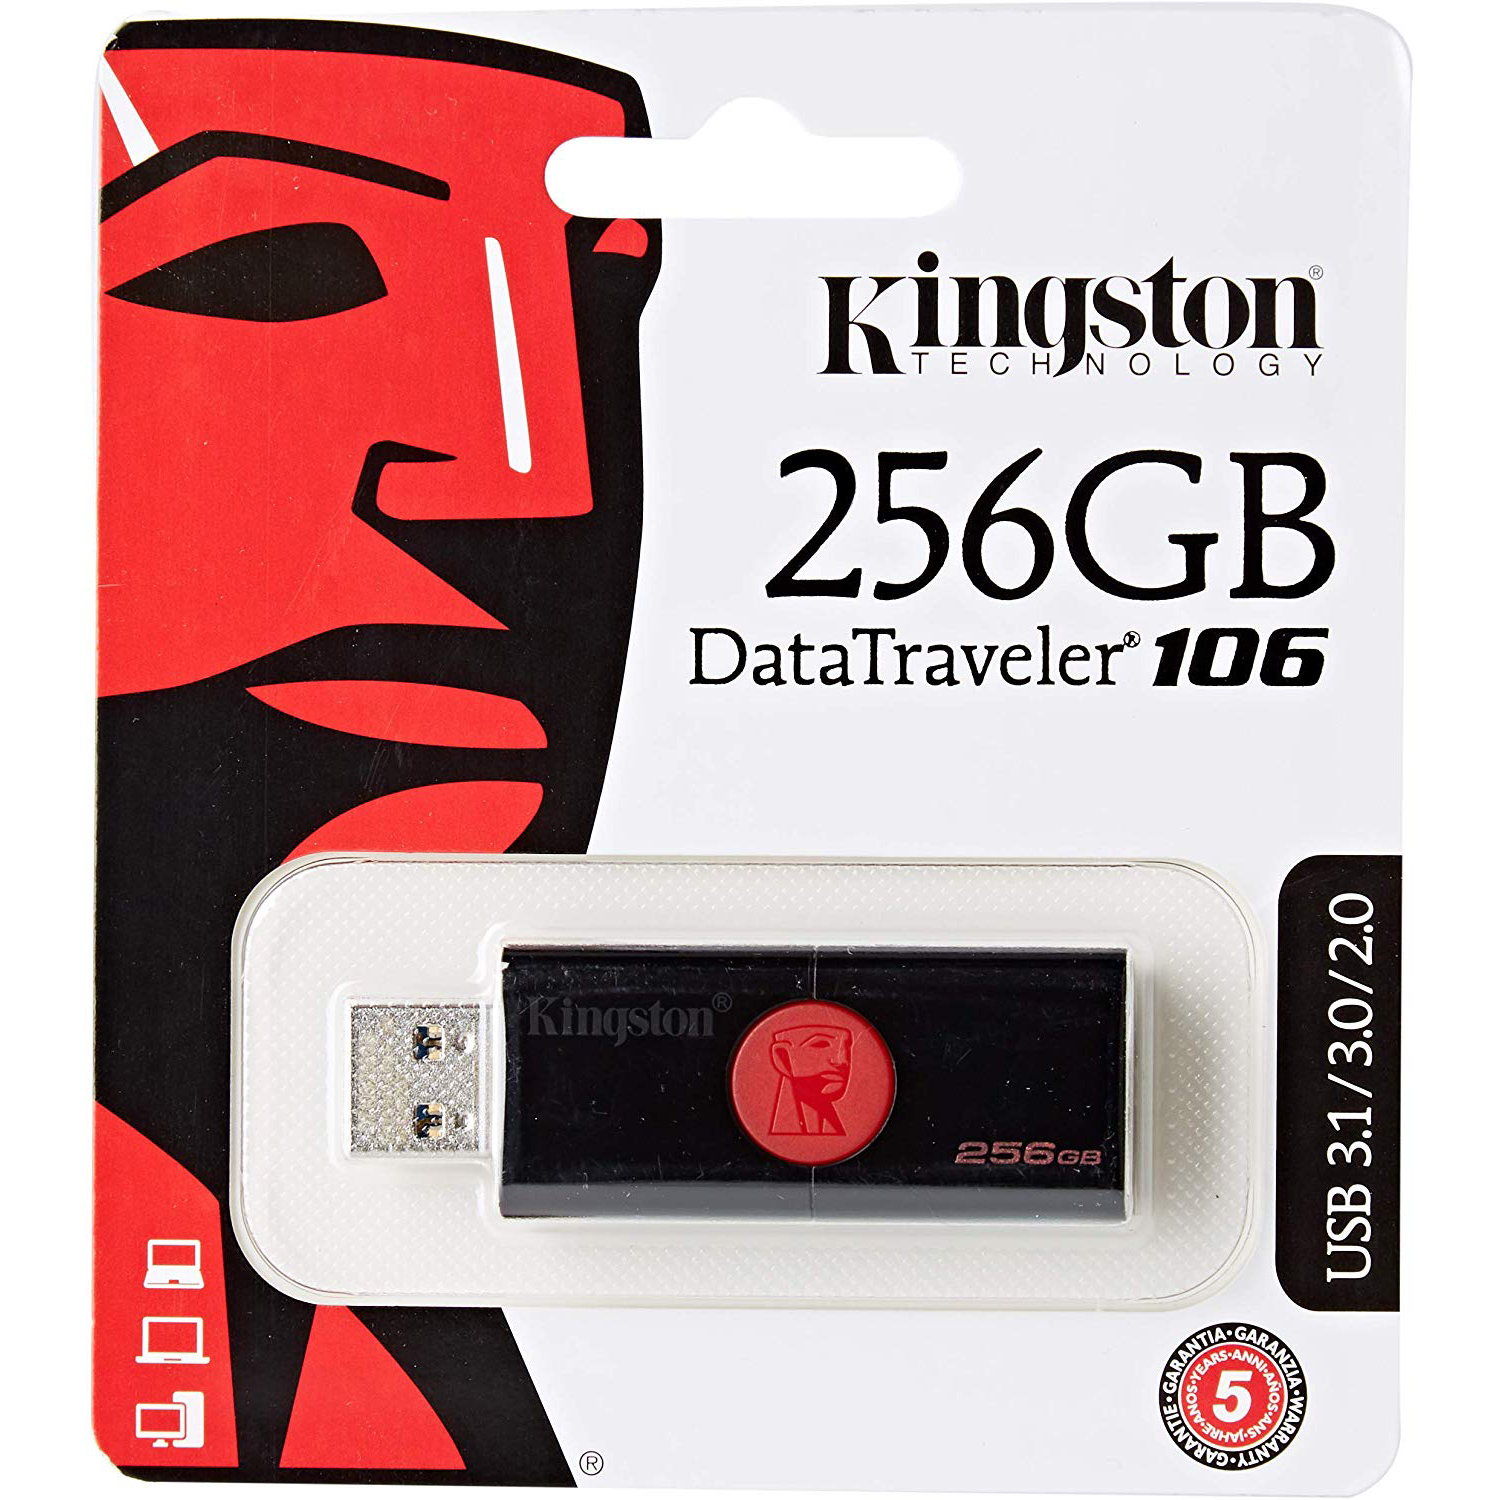 Original Kingston Data Traveler 106 256GB USB 3.0 Flash Drive (DT106/256GB)